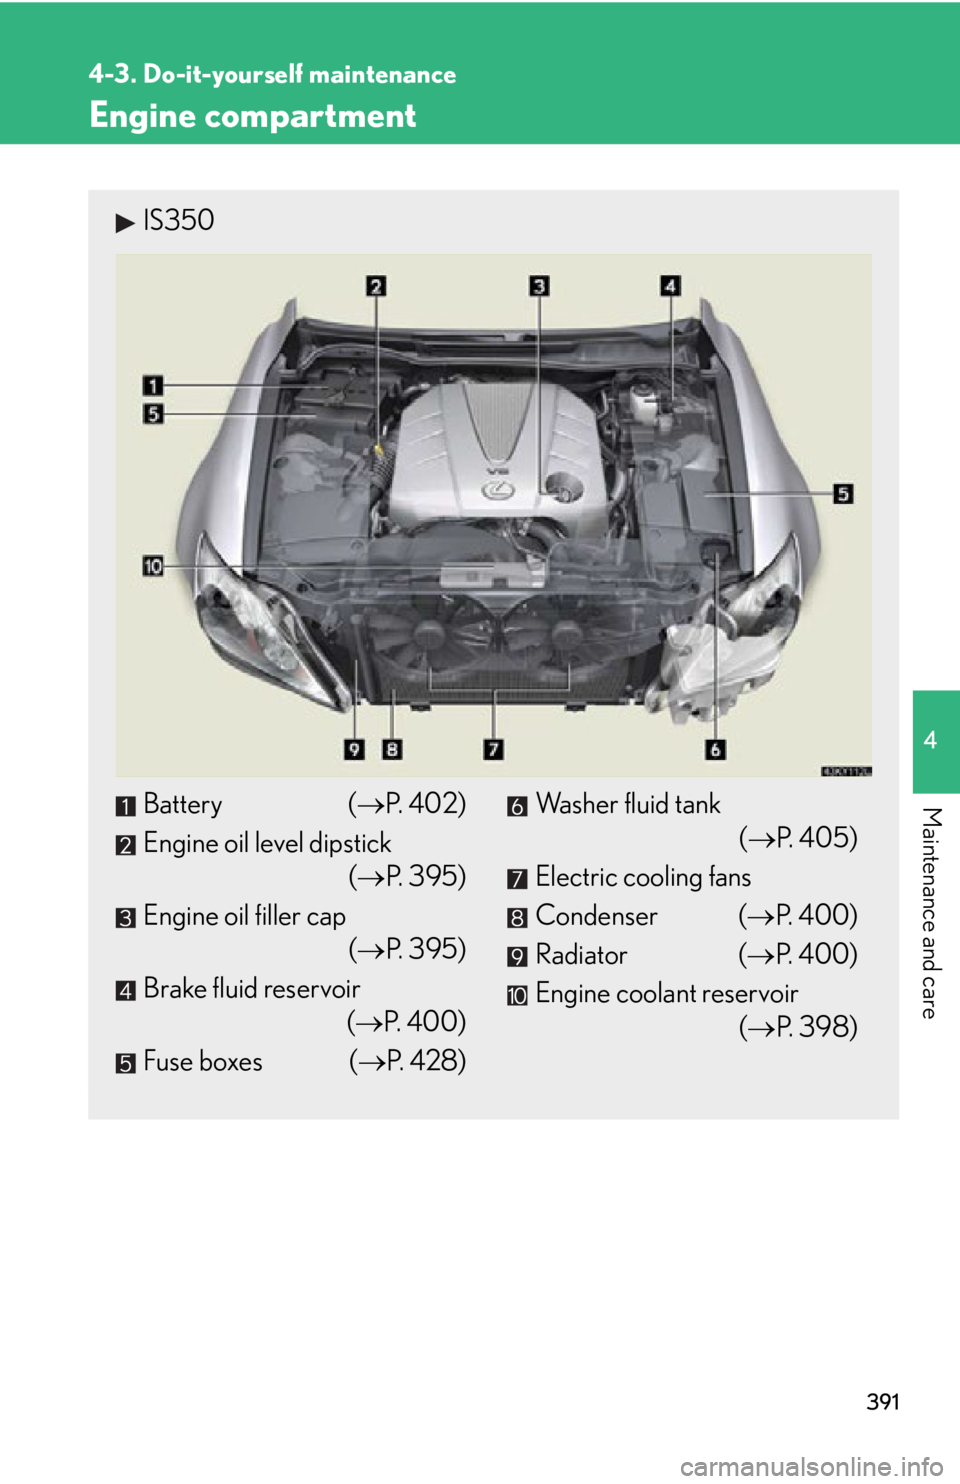 Lexus IS350 2013  Owners Manual / LEXUS 2013 IS250,IS350 OWNERS MANUAL (OM53B64U) 391
4-3. Do-it-yourself maintenance
4
Maintenance and care
Engine compartment
IS350
Battery (P.  4 0 2 )
Engine oil level dipstick (P. 395)
Engine oil filler cap (P. 395)
Brake fluid reservoi